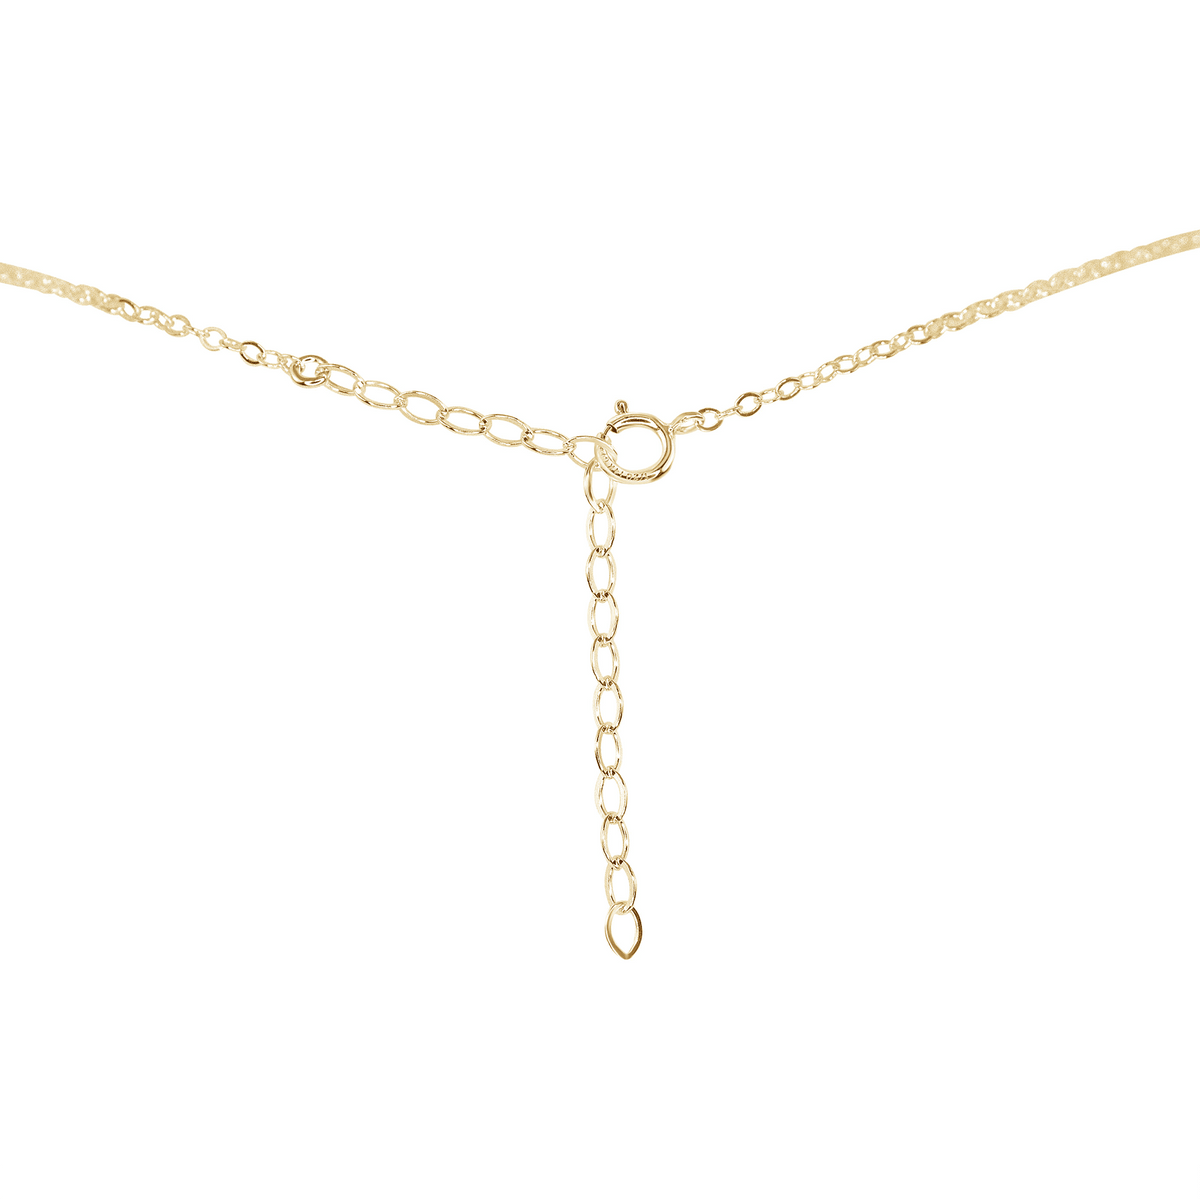 Dainty Crystal Quartz Gemstone Choker Necklace - Dainty Crystal Quartz Gemstone Choker Necklace - 14k Gold Fill - Luna Tide Handmade Crystal Jewellery